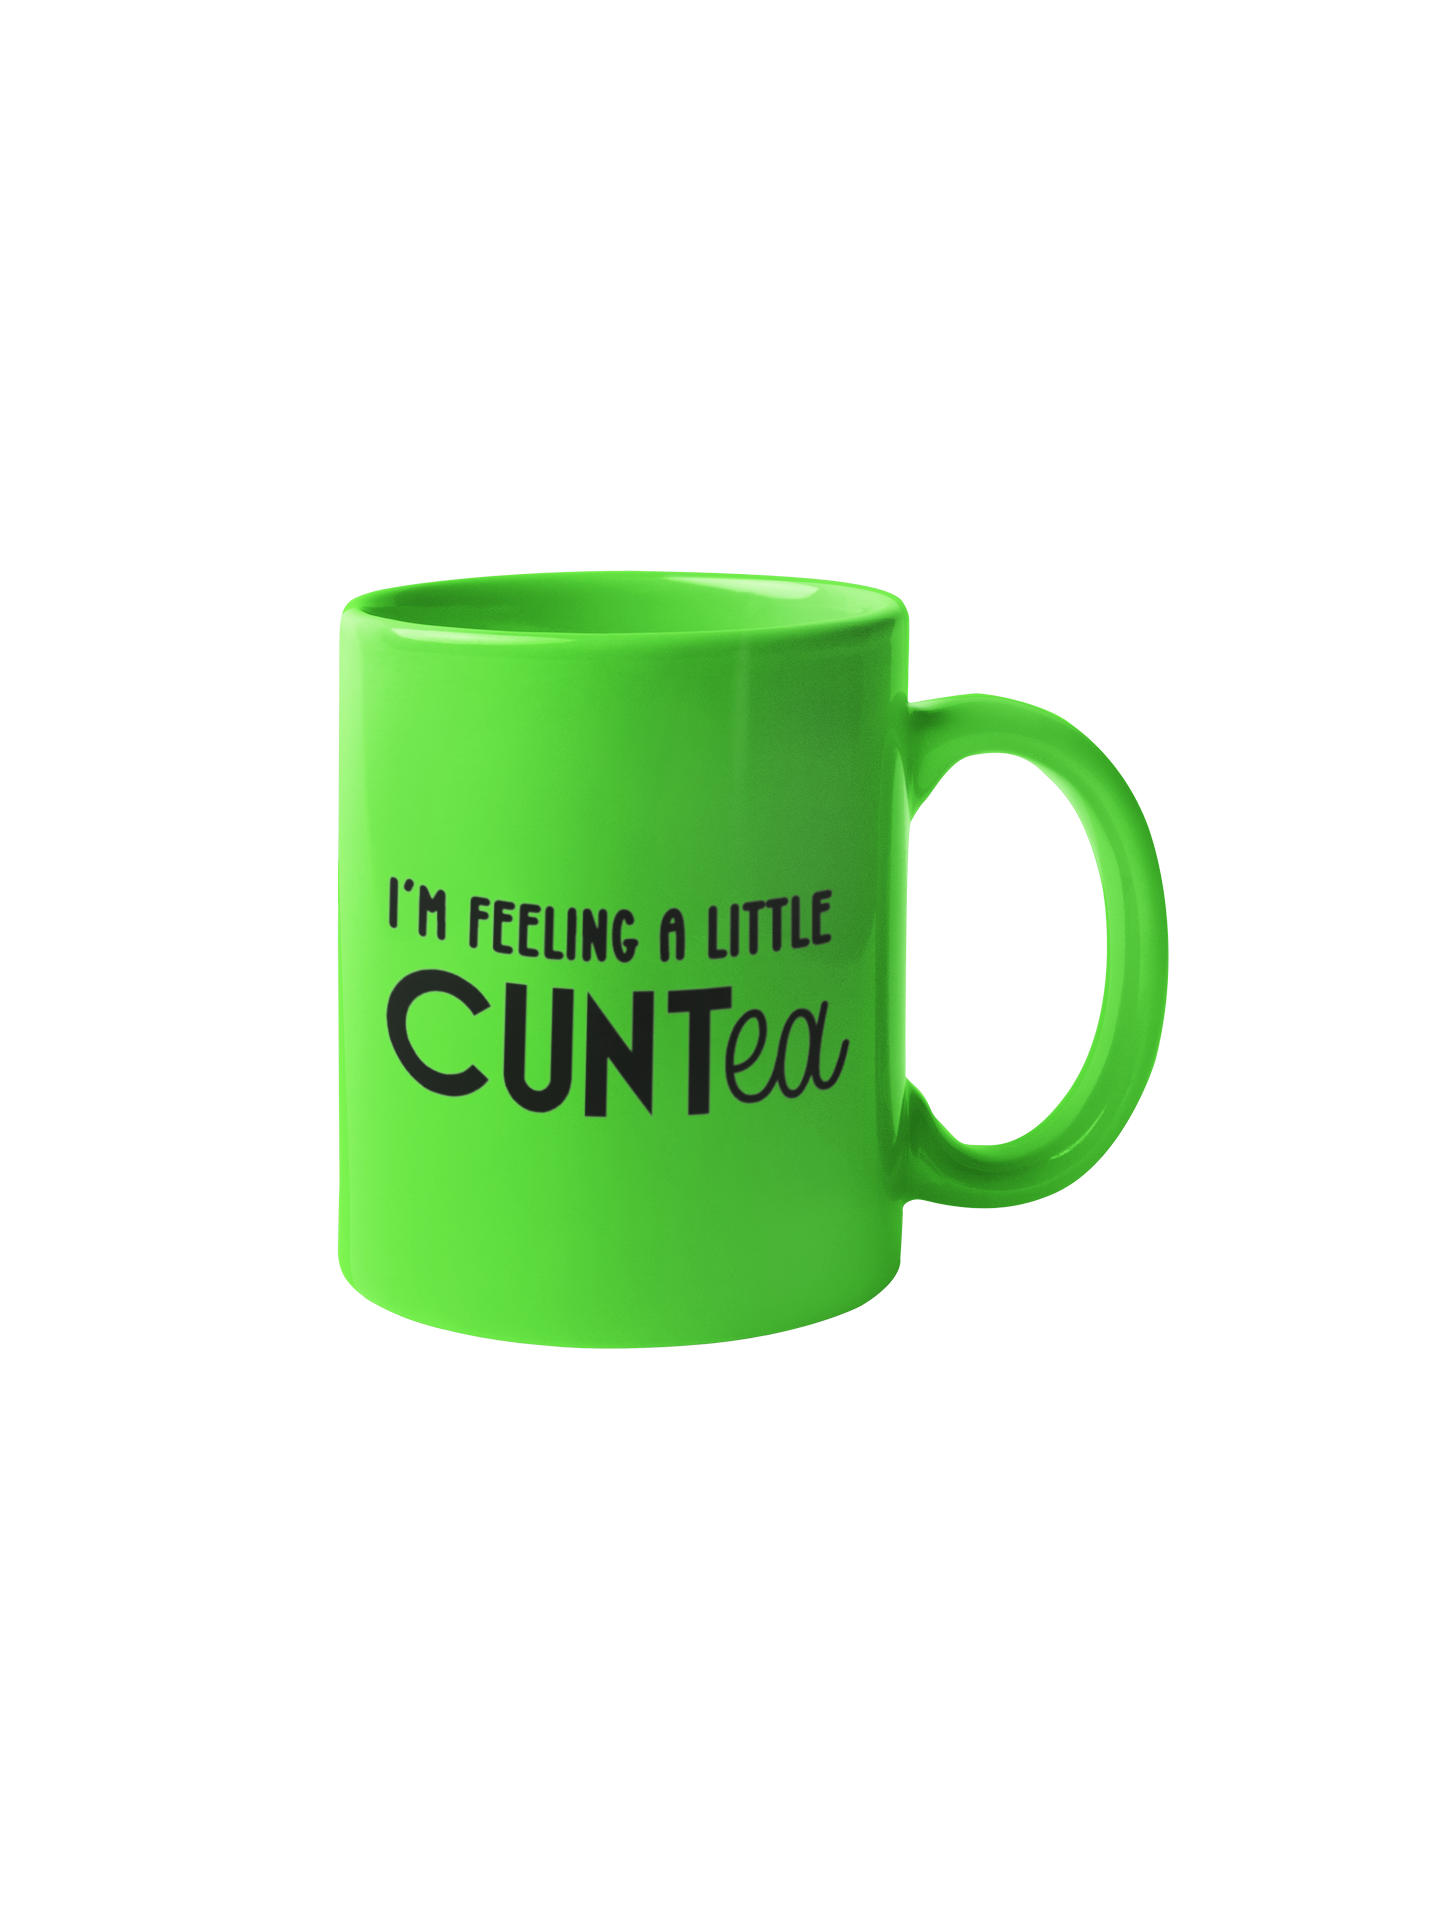 I'm feeling a little CUNTea Mug